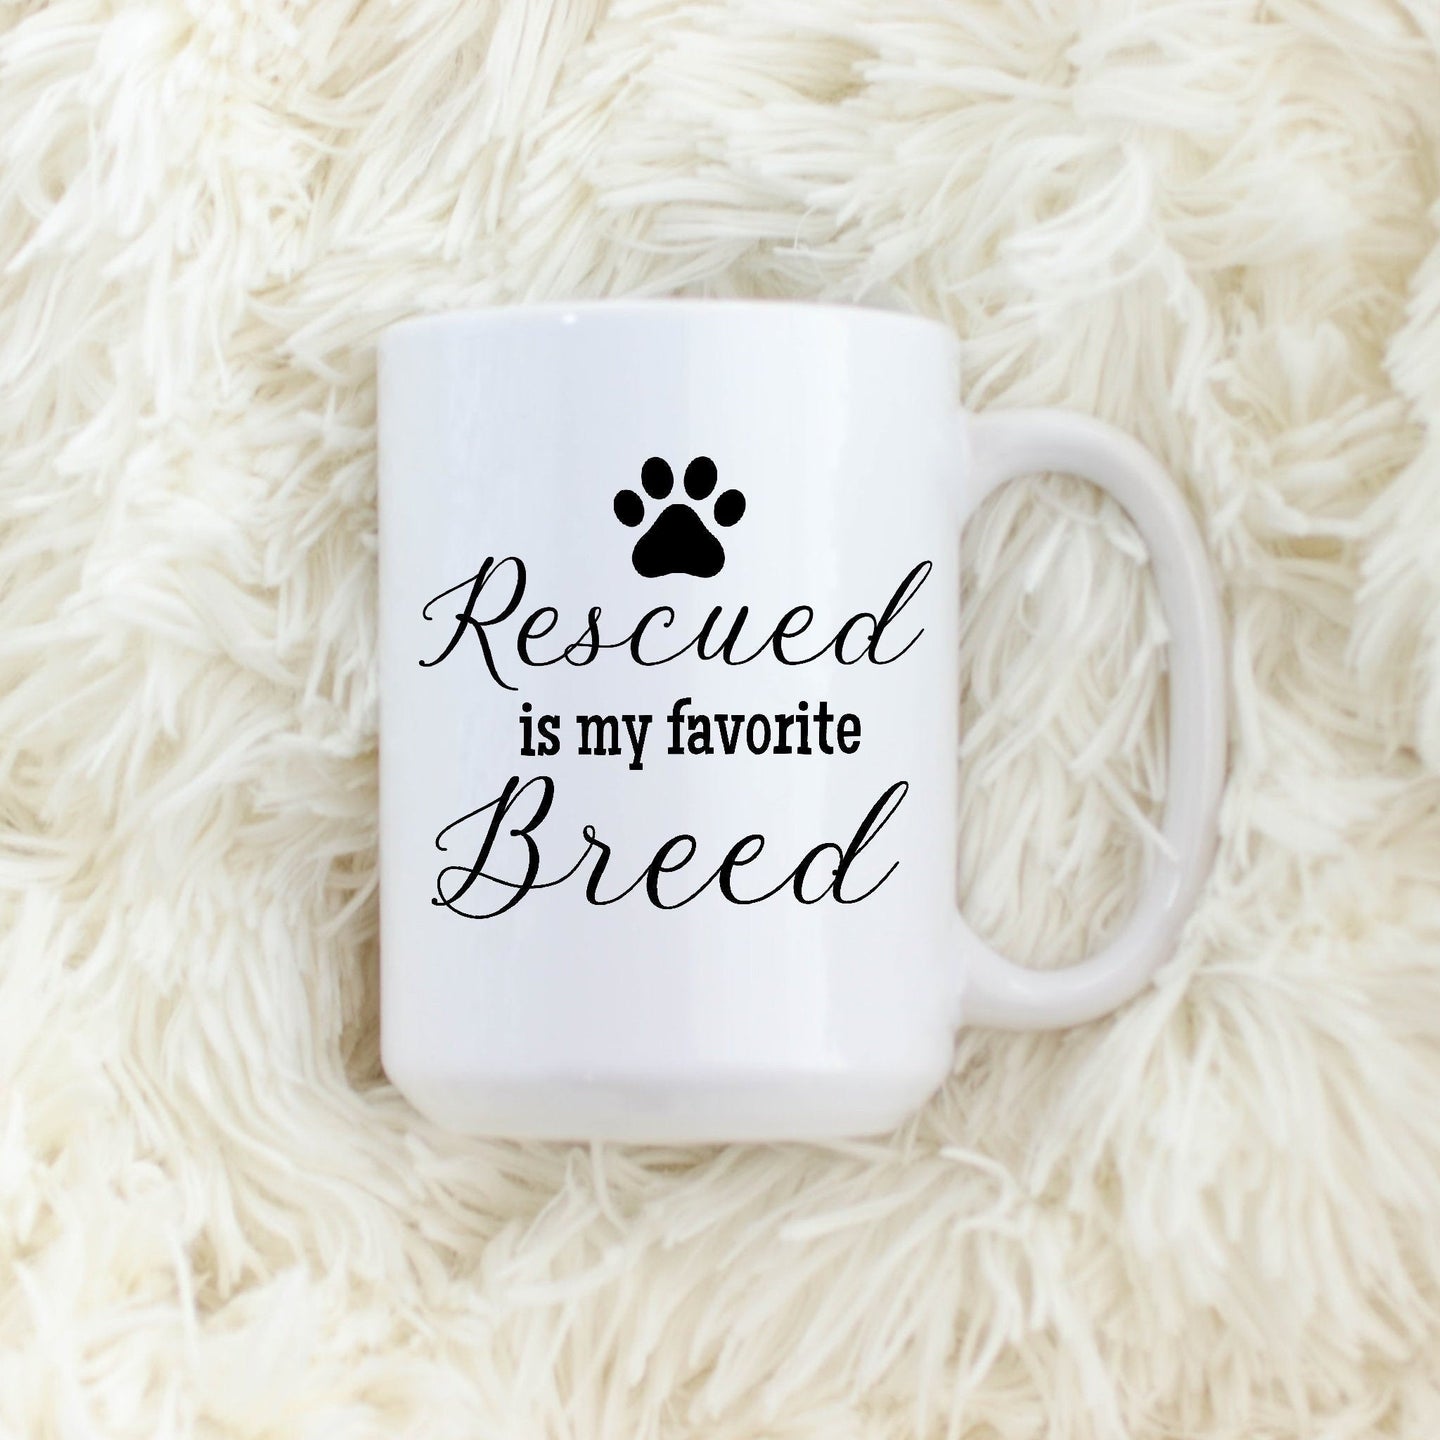 Rescued is my Favorite Breed Dog Mug